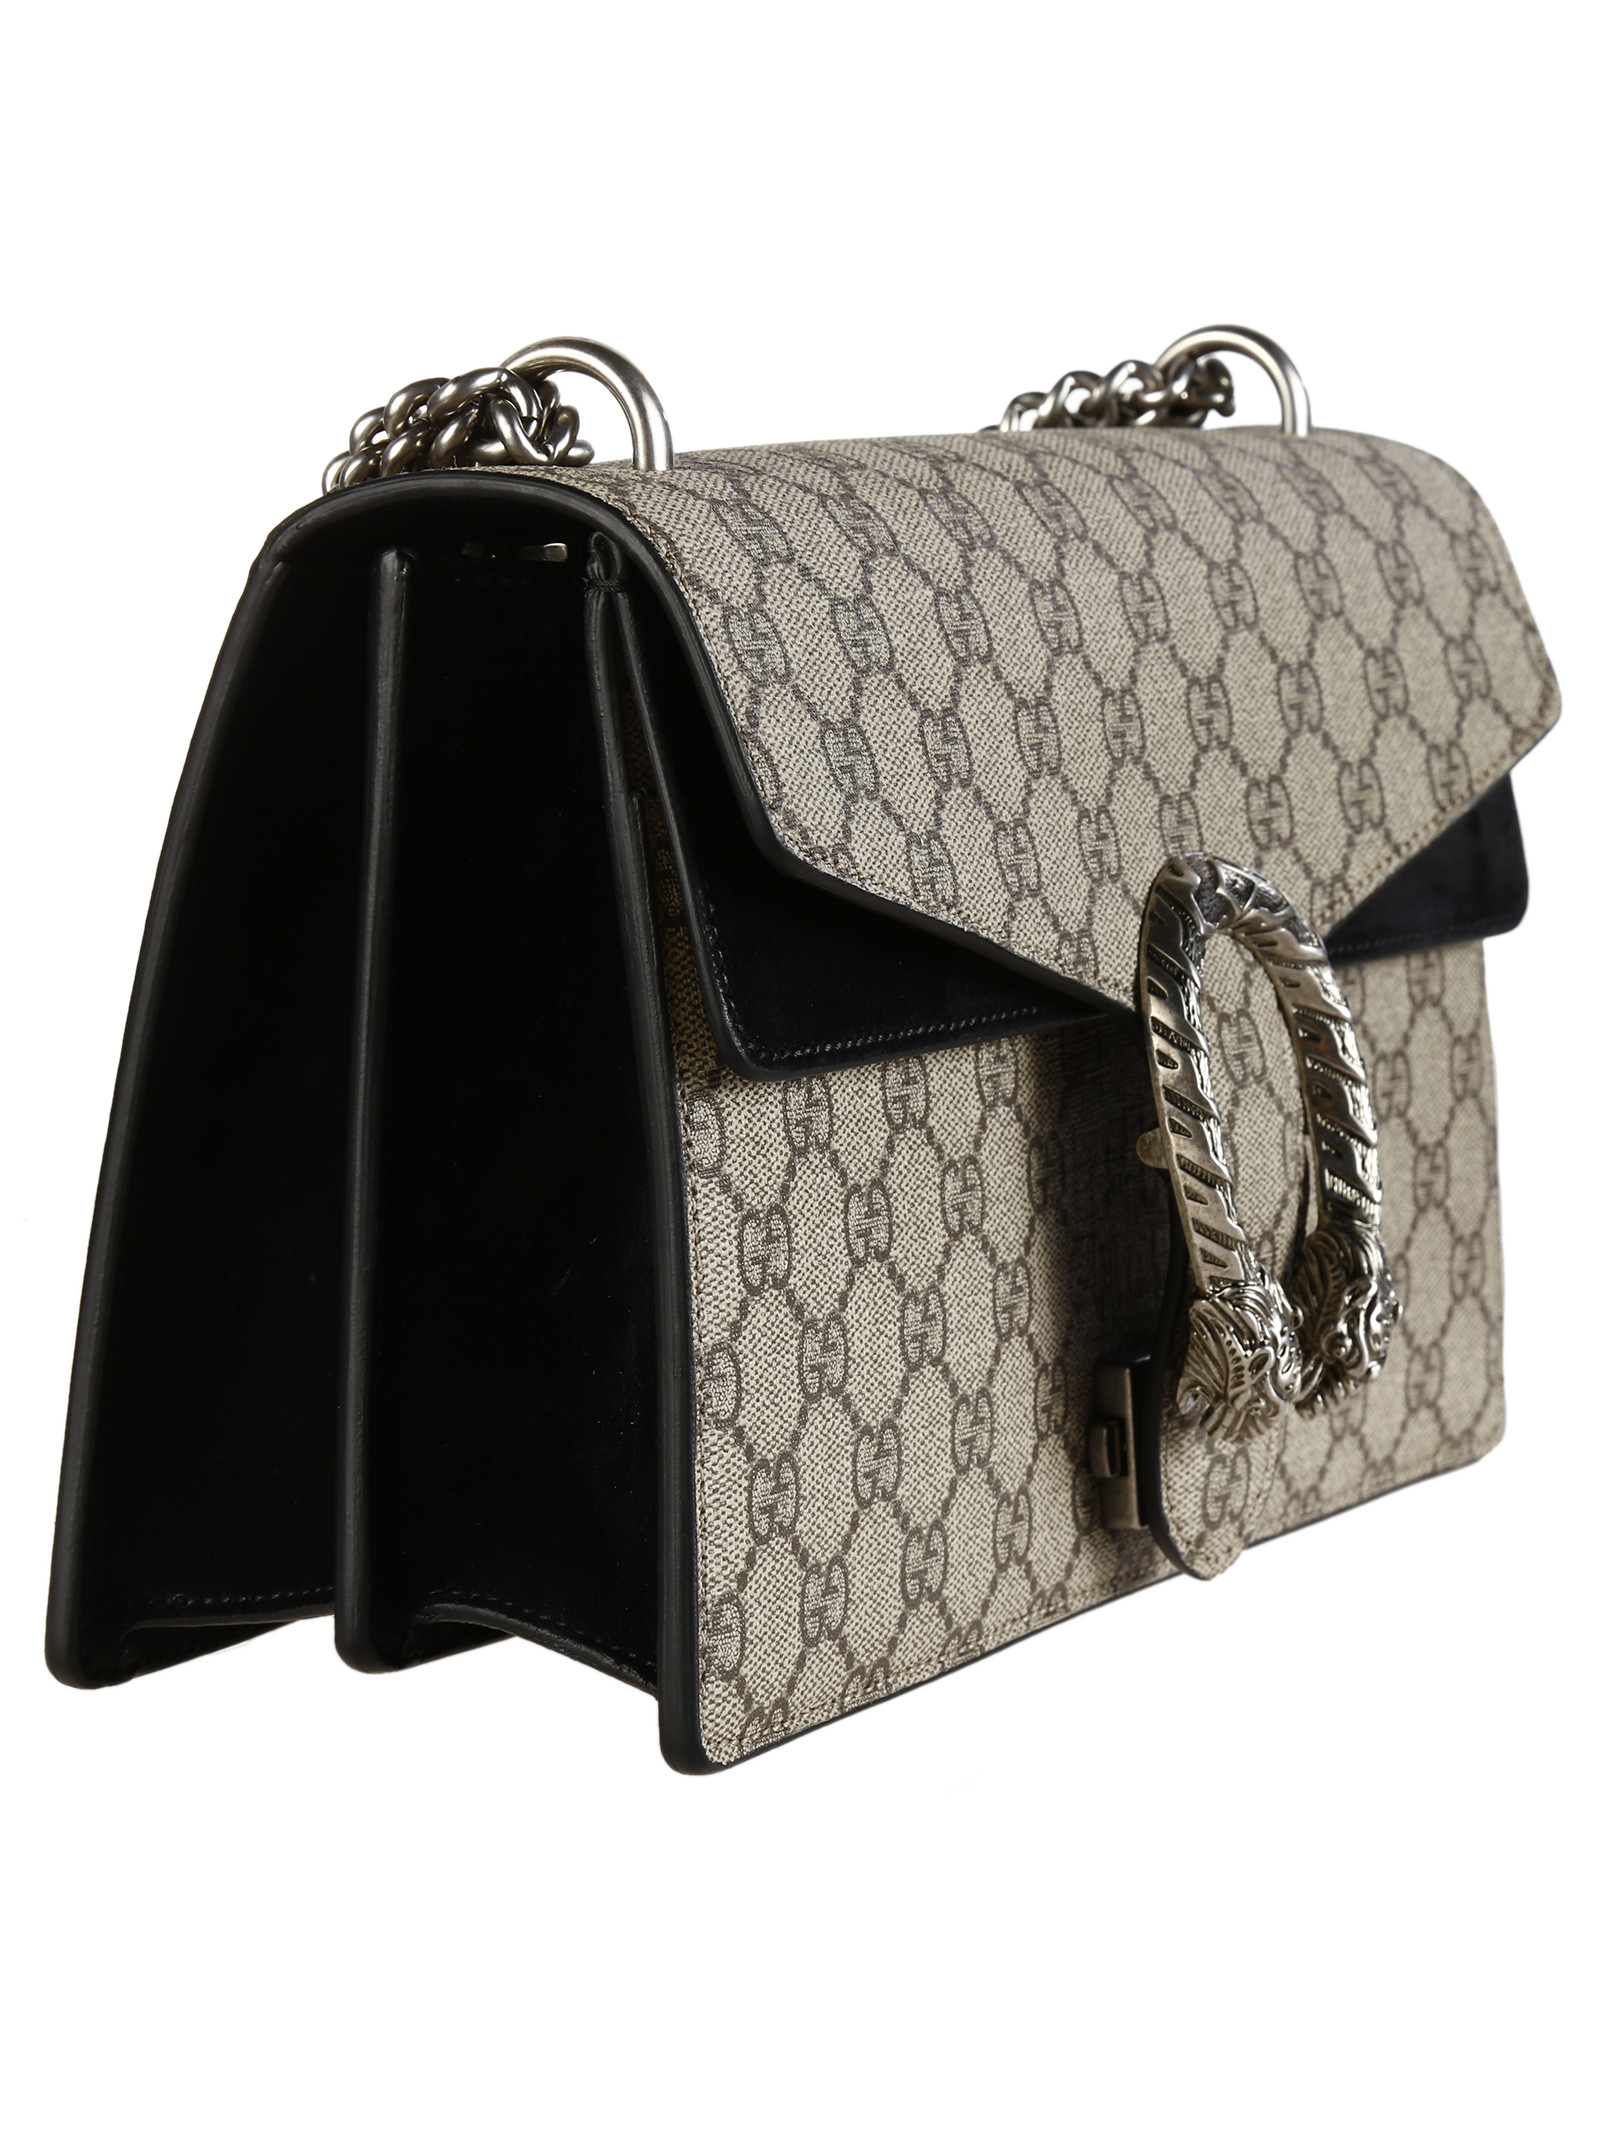 Gucci Dionysus Gg Supreme Canvas Small Shoulder Bag in Beige (Beige/Ebony/Black) | Lyst